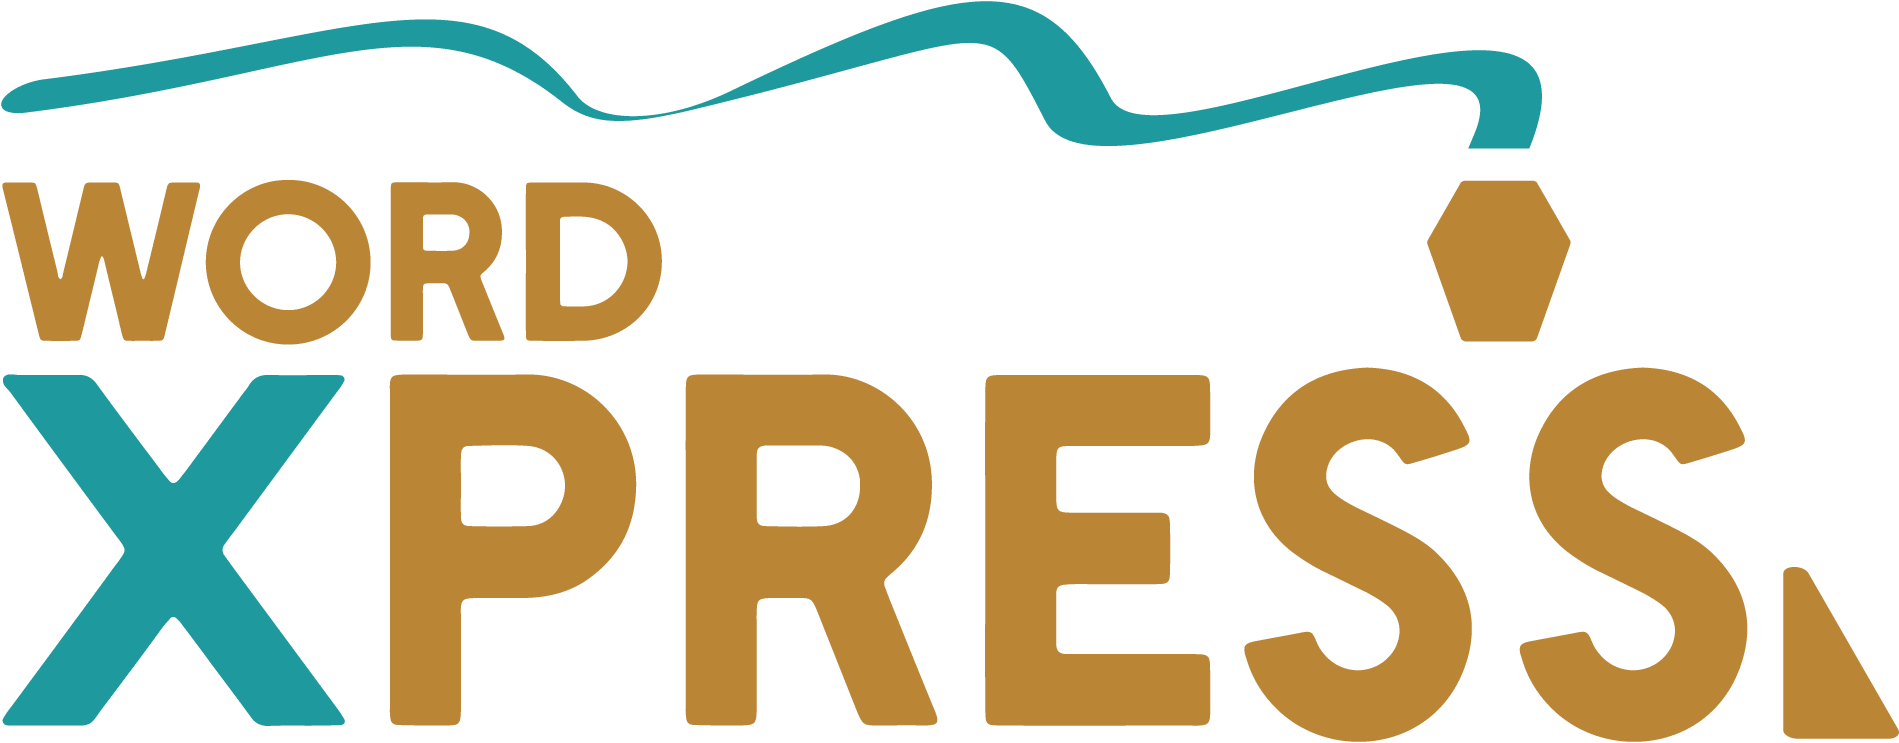 Wordxpress - Wordxpress - Wp Maintenance & Support (1920x759)